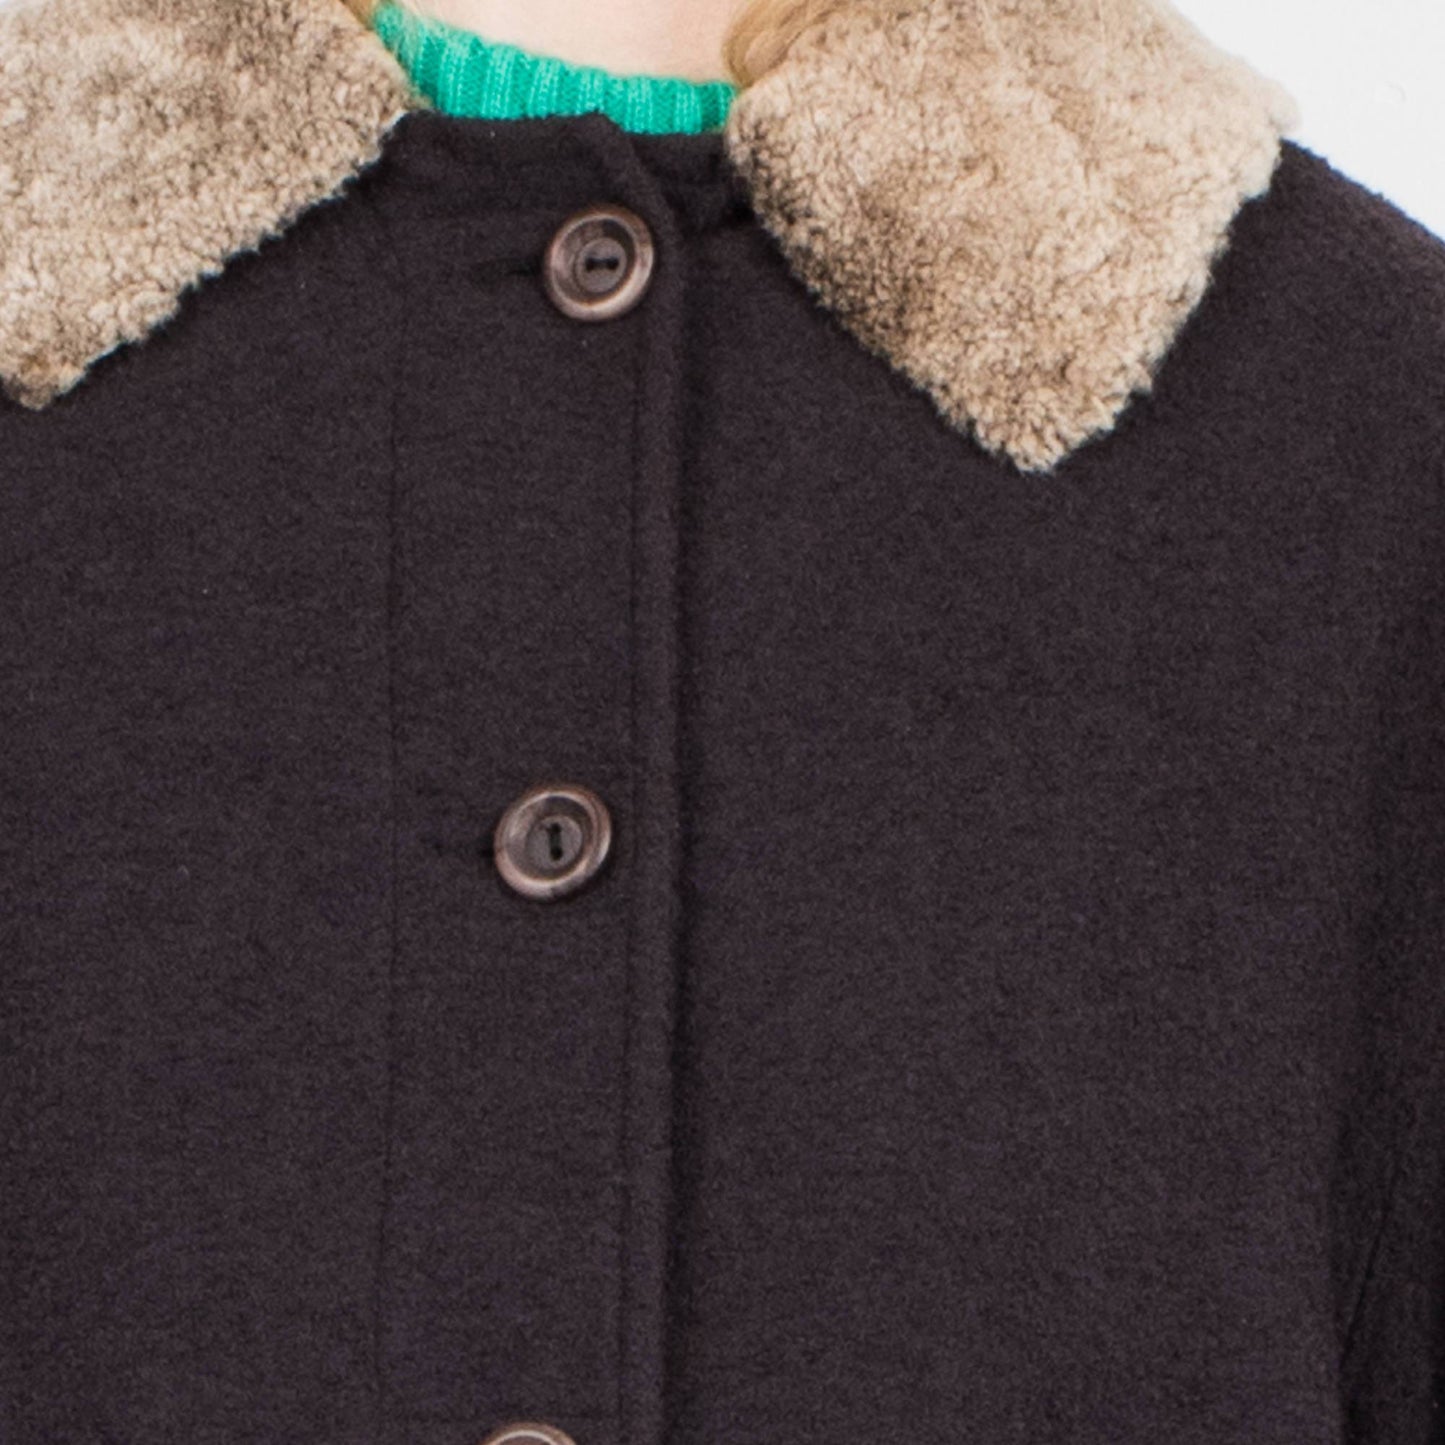 Vintage Dark Chocolate Teddy Bear Coat with Fur Trim / S - Closed Caption